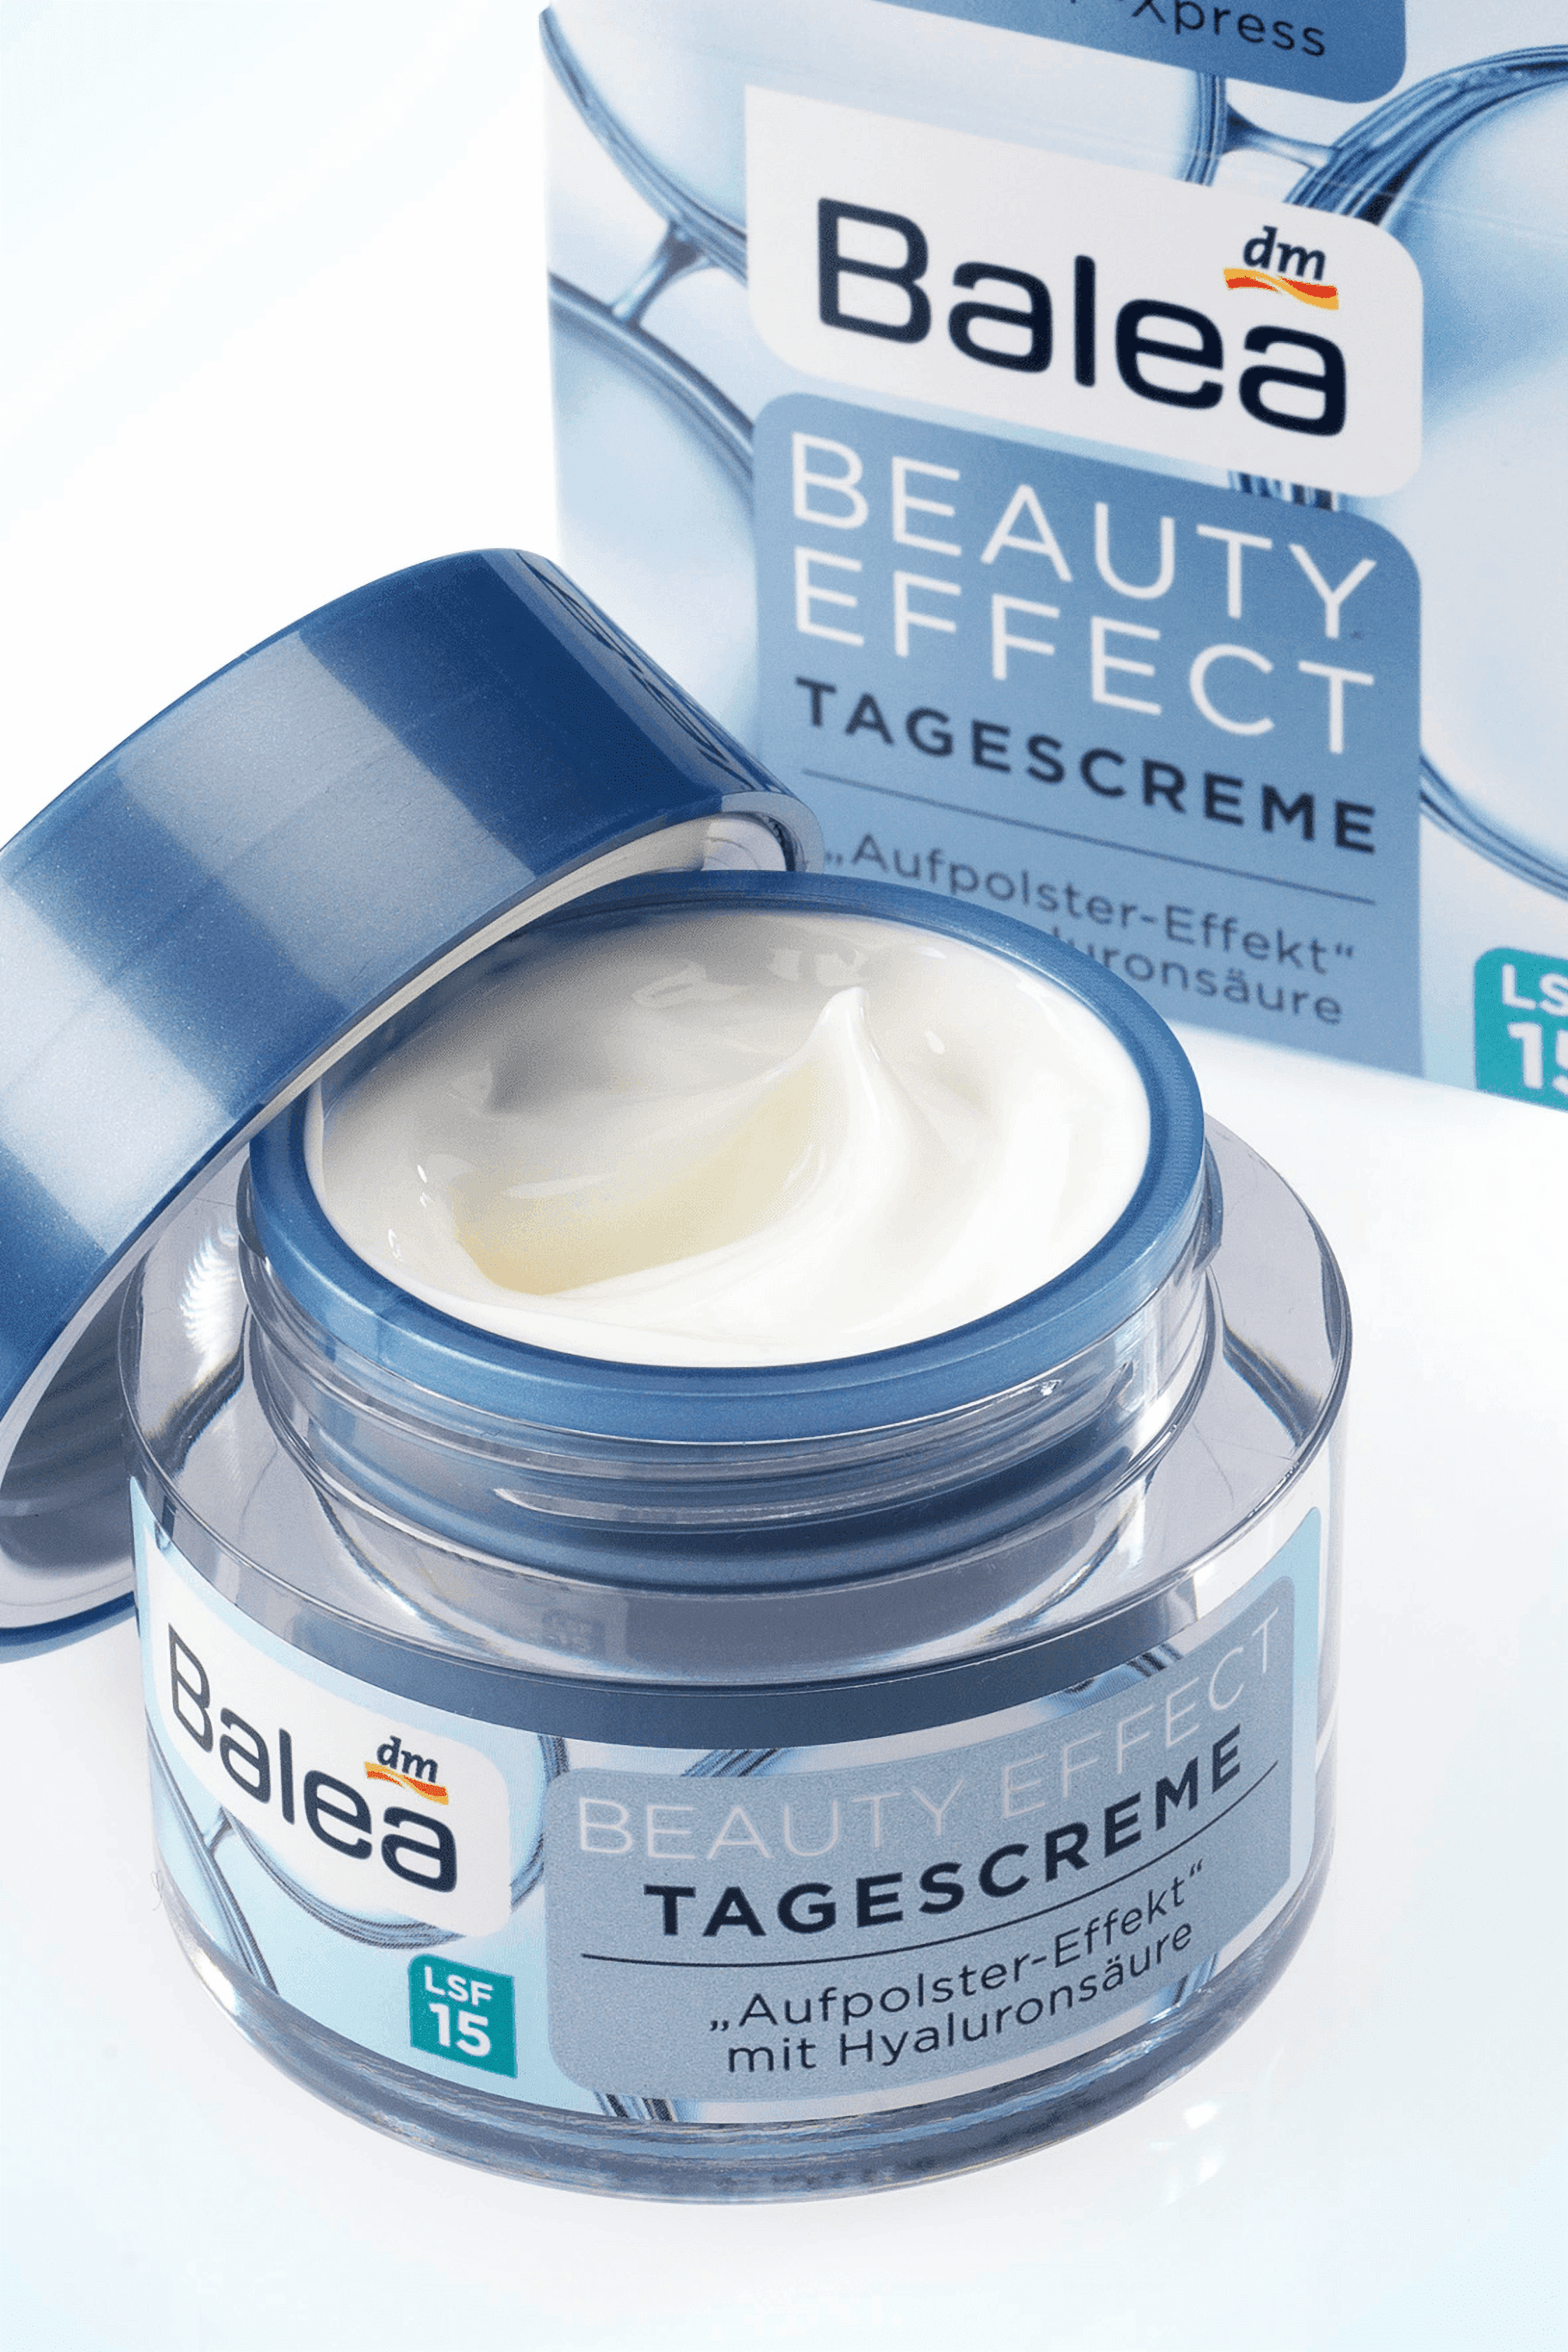 Balea Beauty Effect Day Cream 50 Ml German Product Vegan Walmart Com Walmart Com